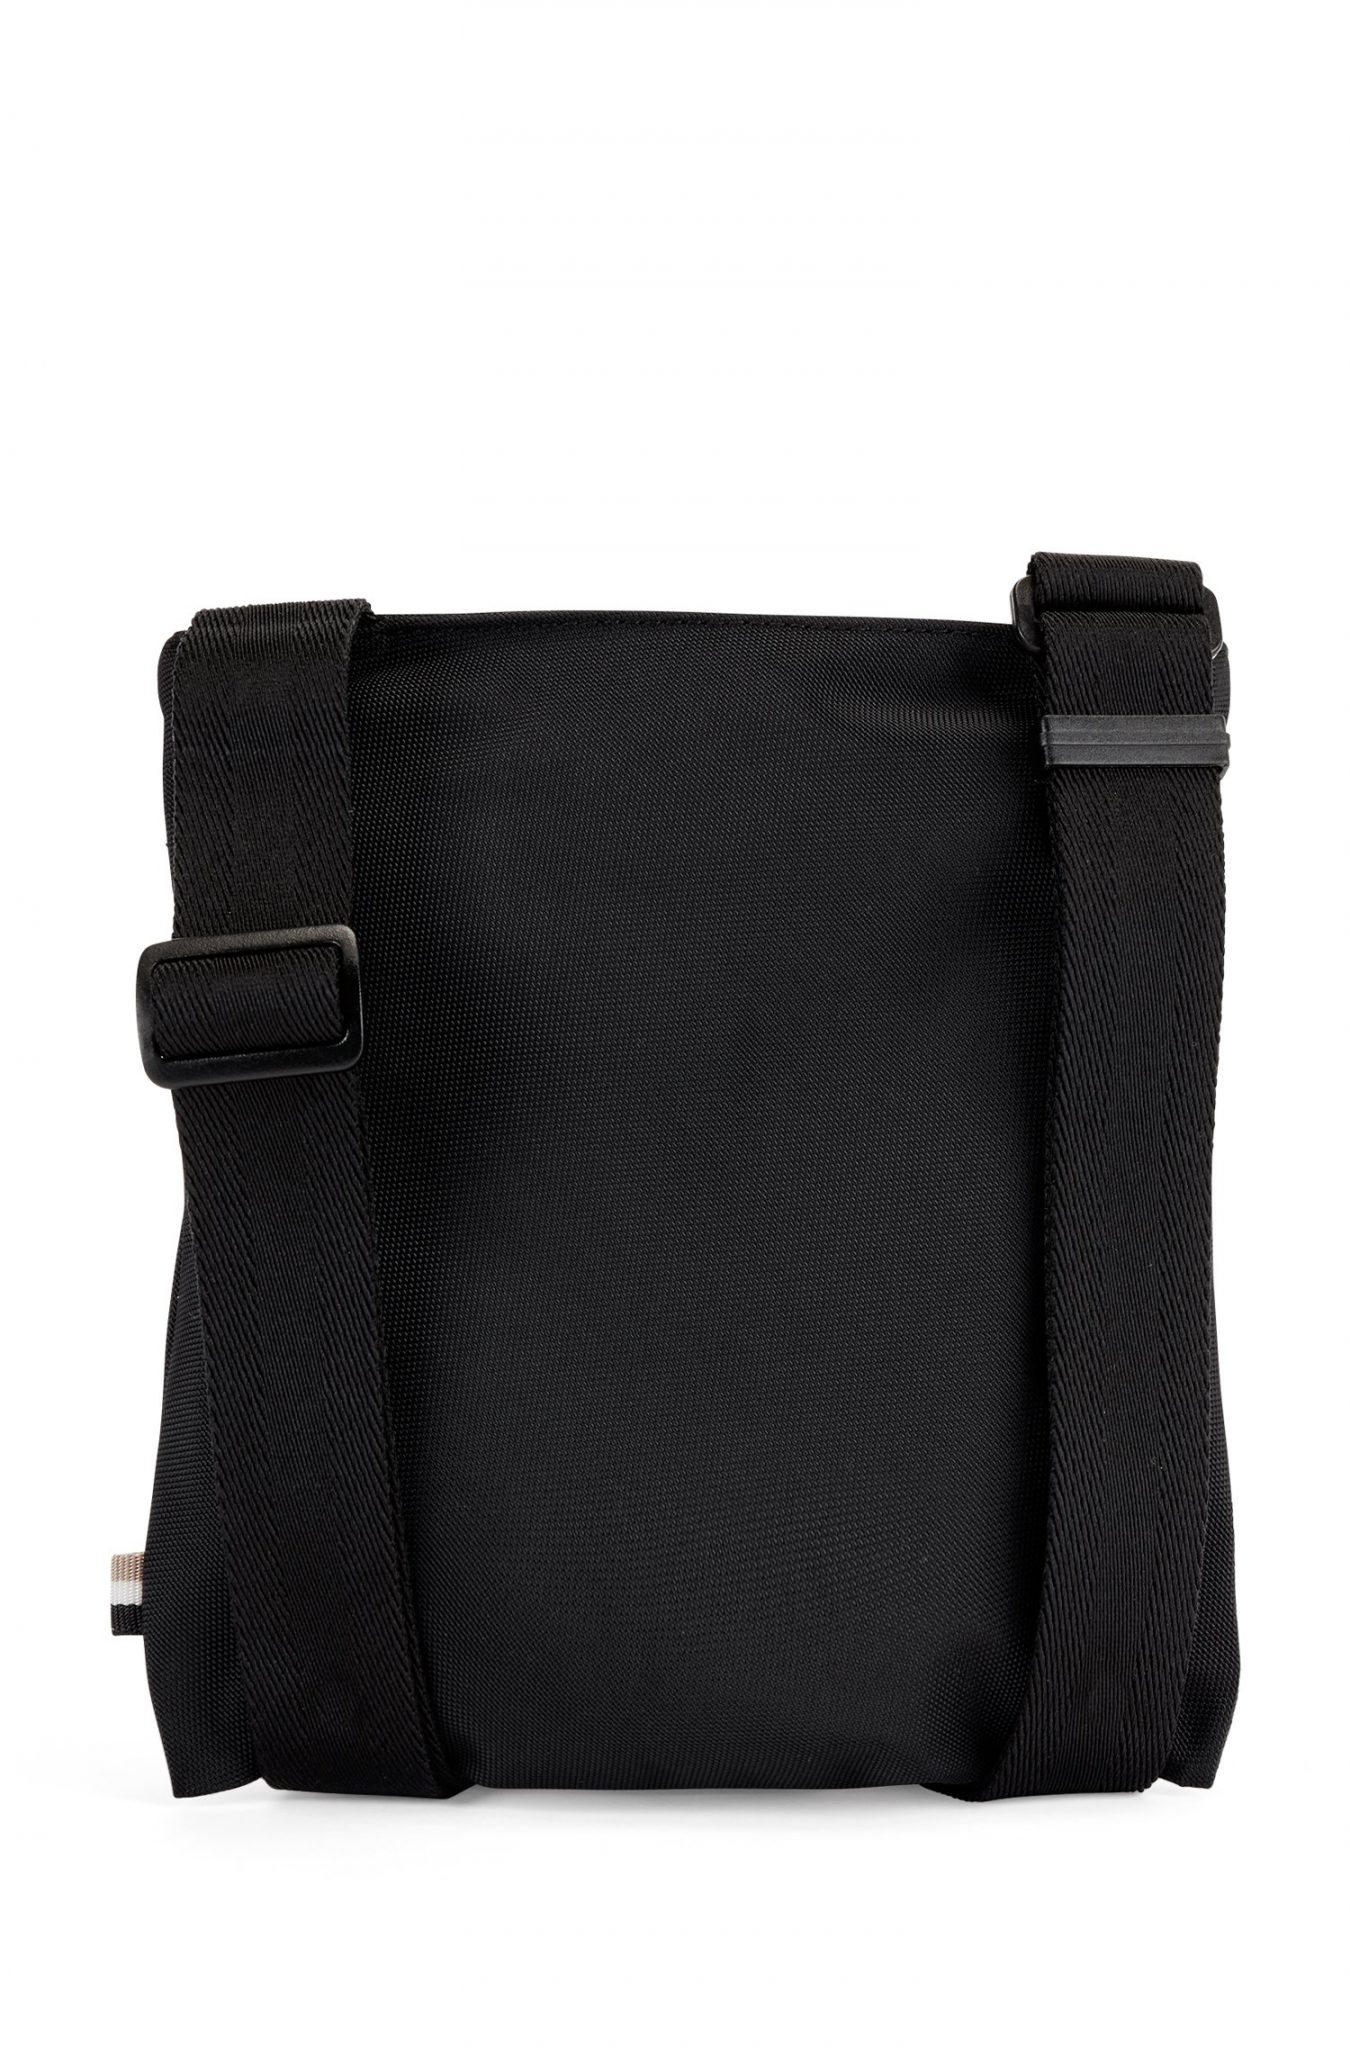 Buy Hugo Boss Catch Envelope Bag Black - Scandinavian Fashion Store